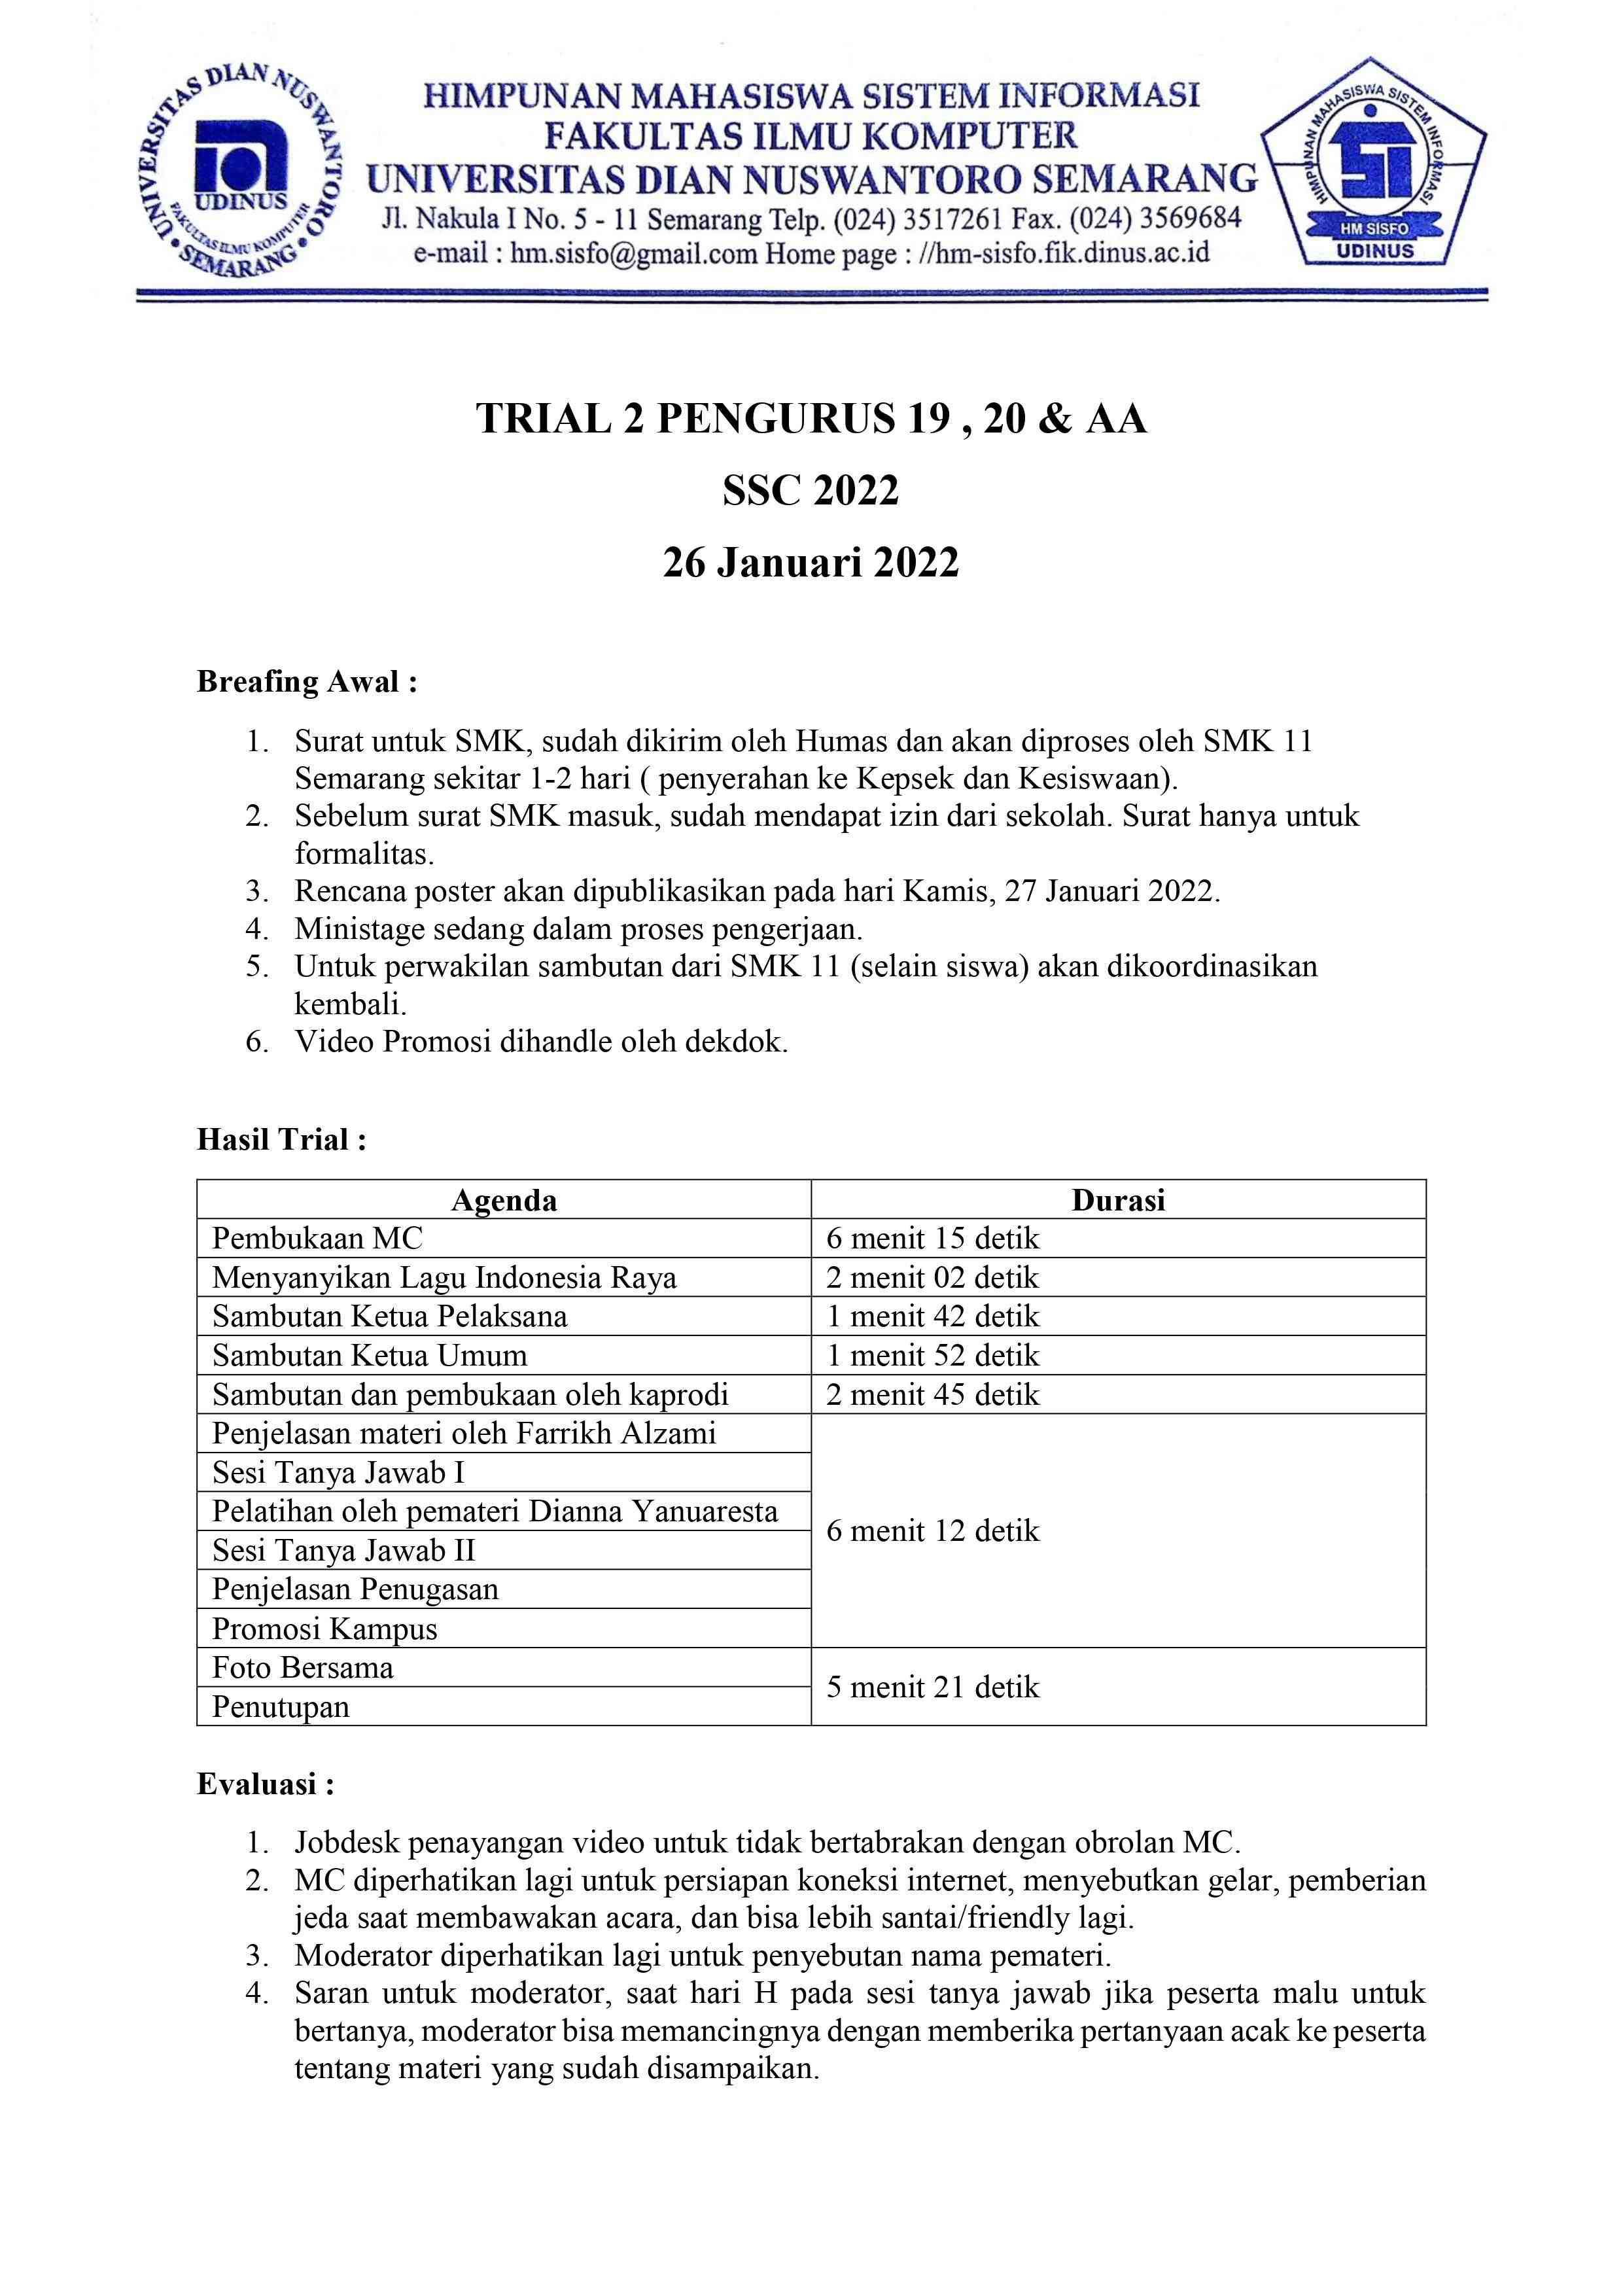 TRIAL PENGURUS (26 JAN 2022) - 1